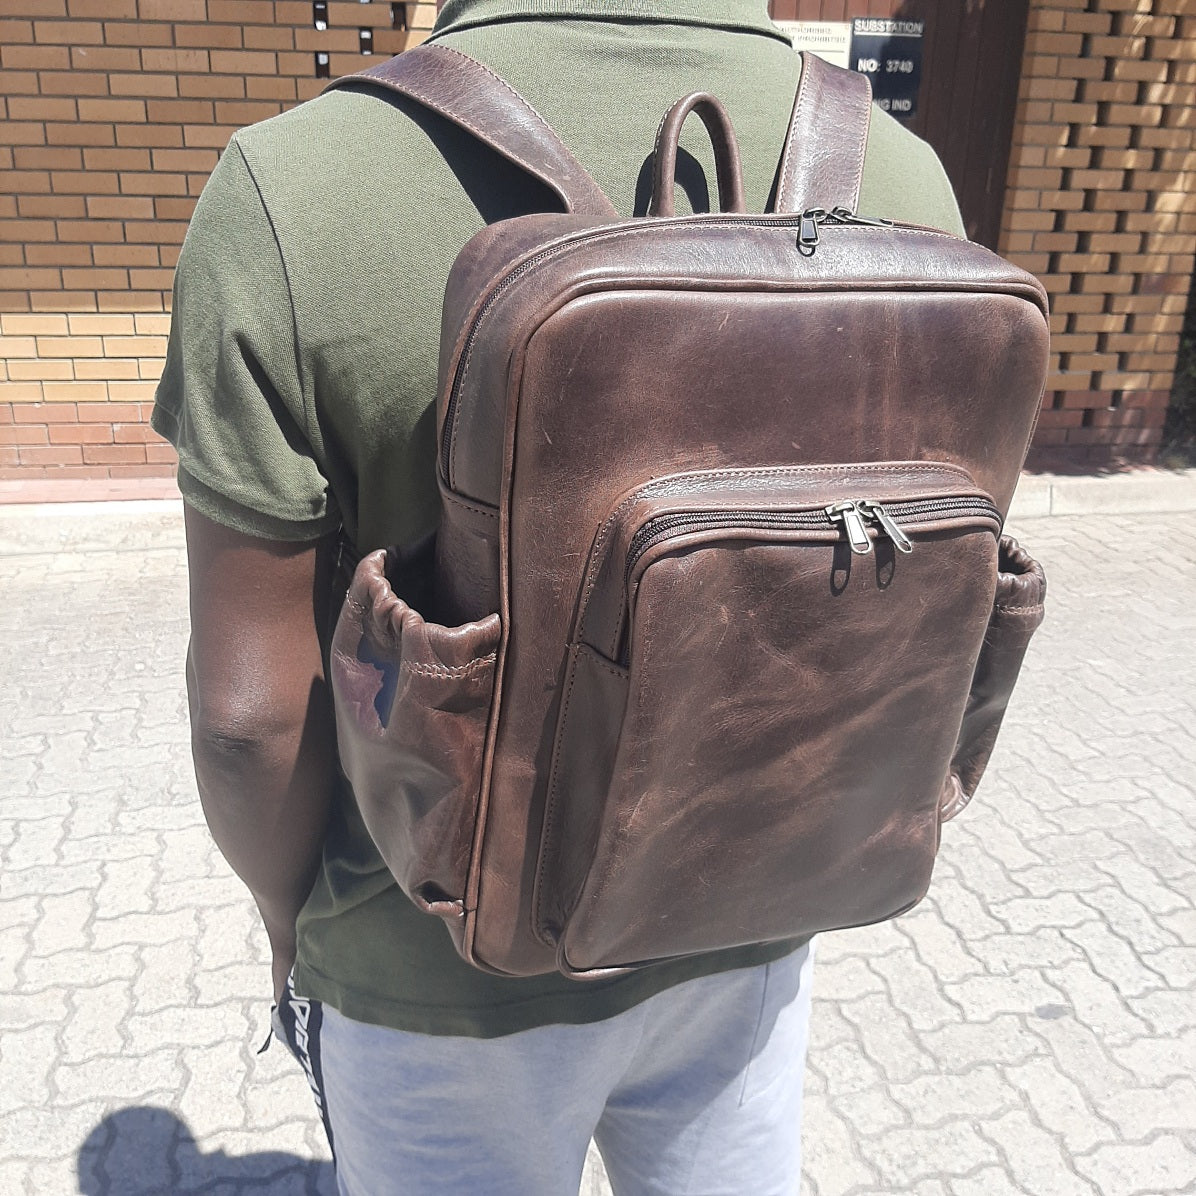 Everyday Laptop backpacks 15"